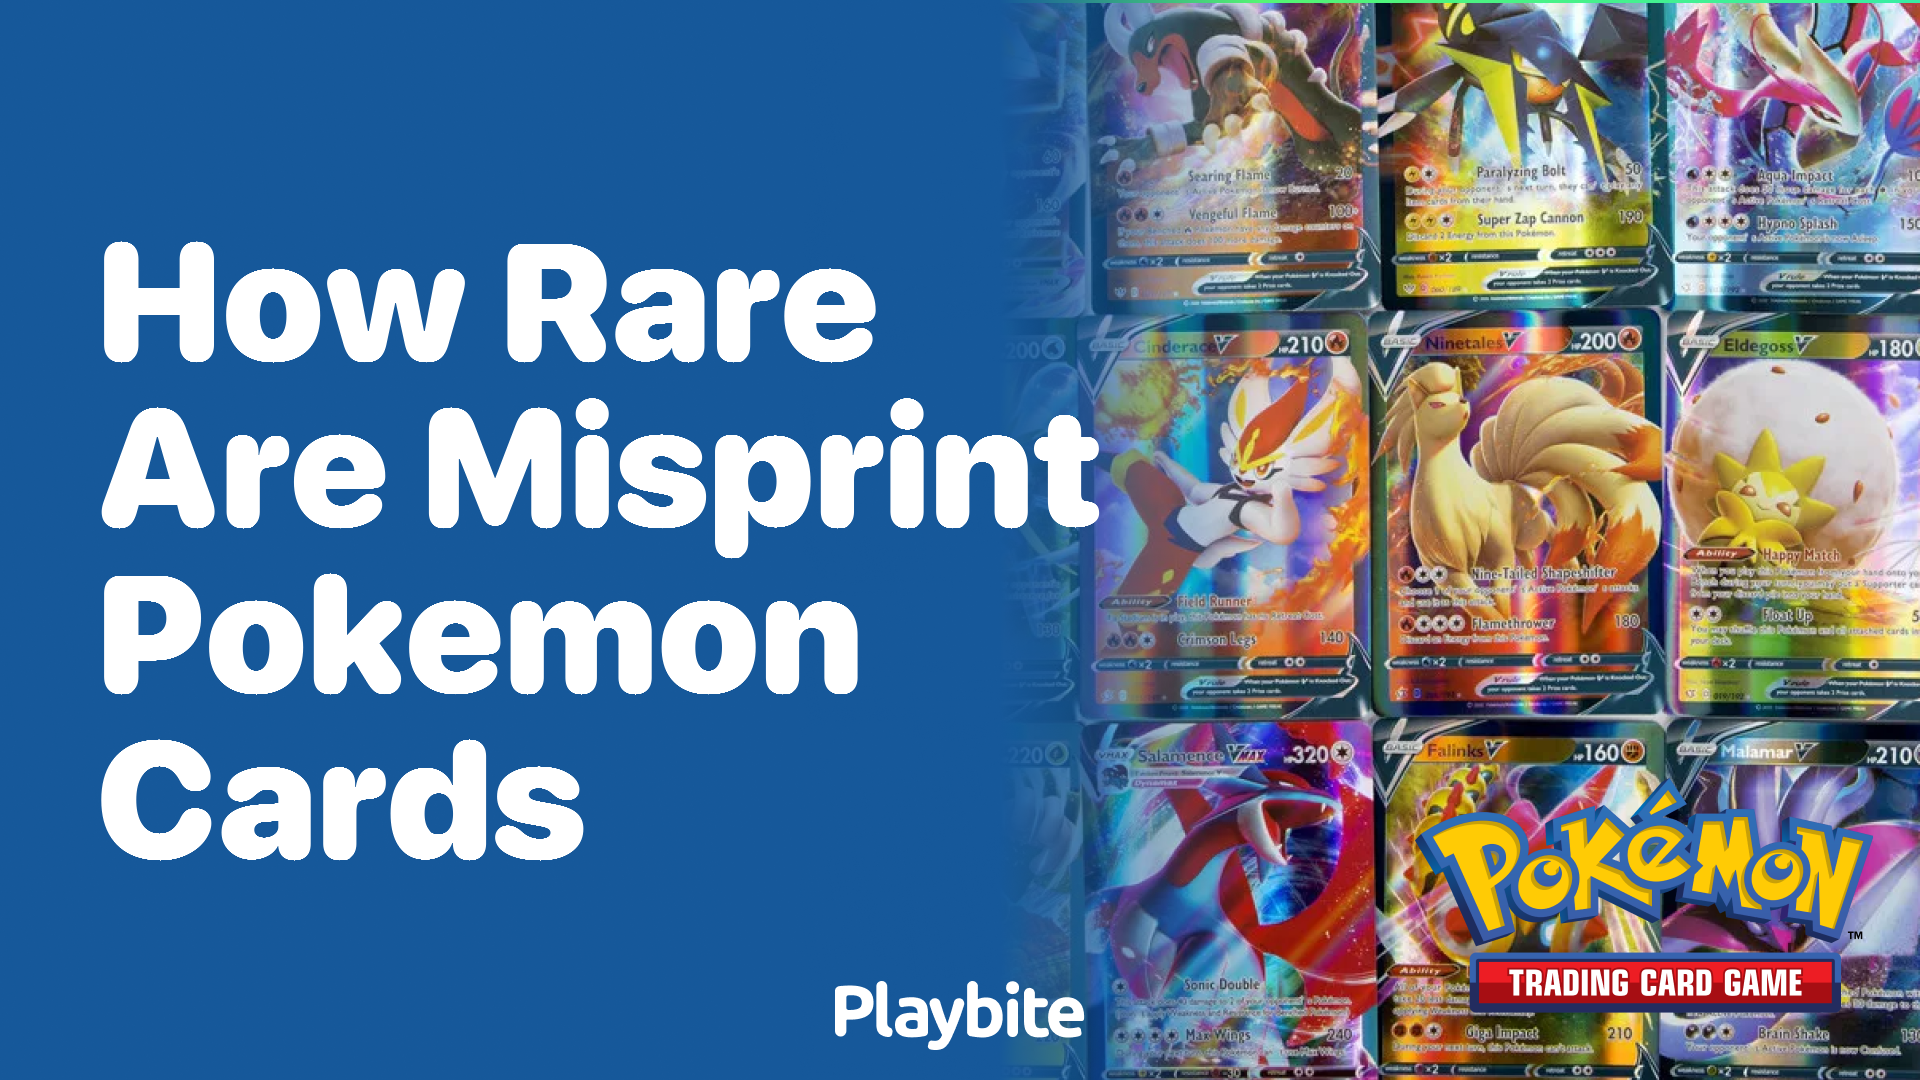 How Rare are Misprint Pokemon Cards?